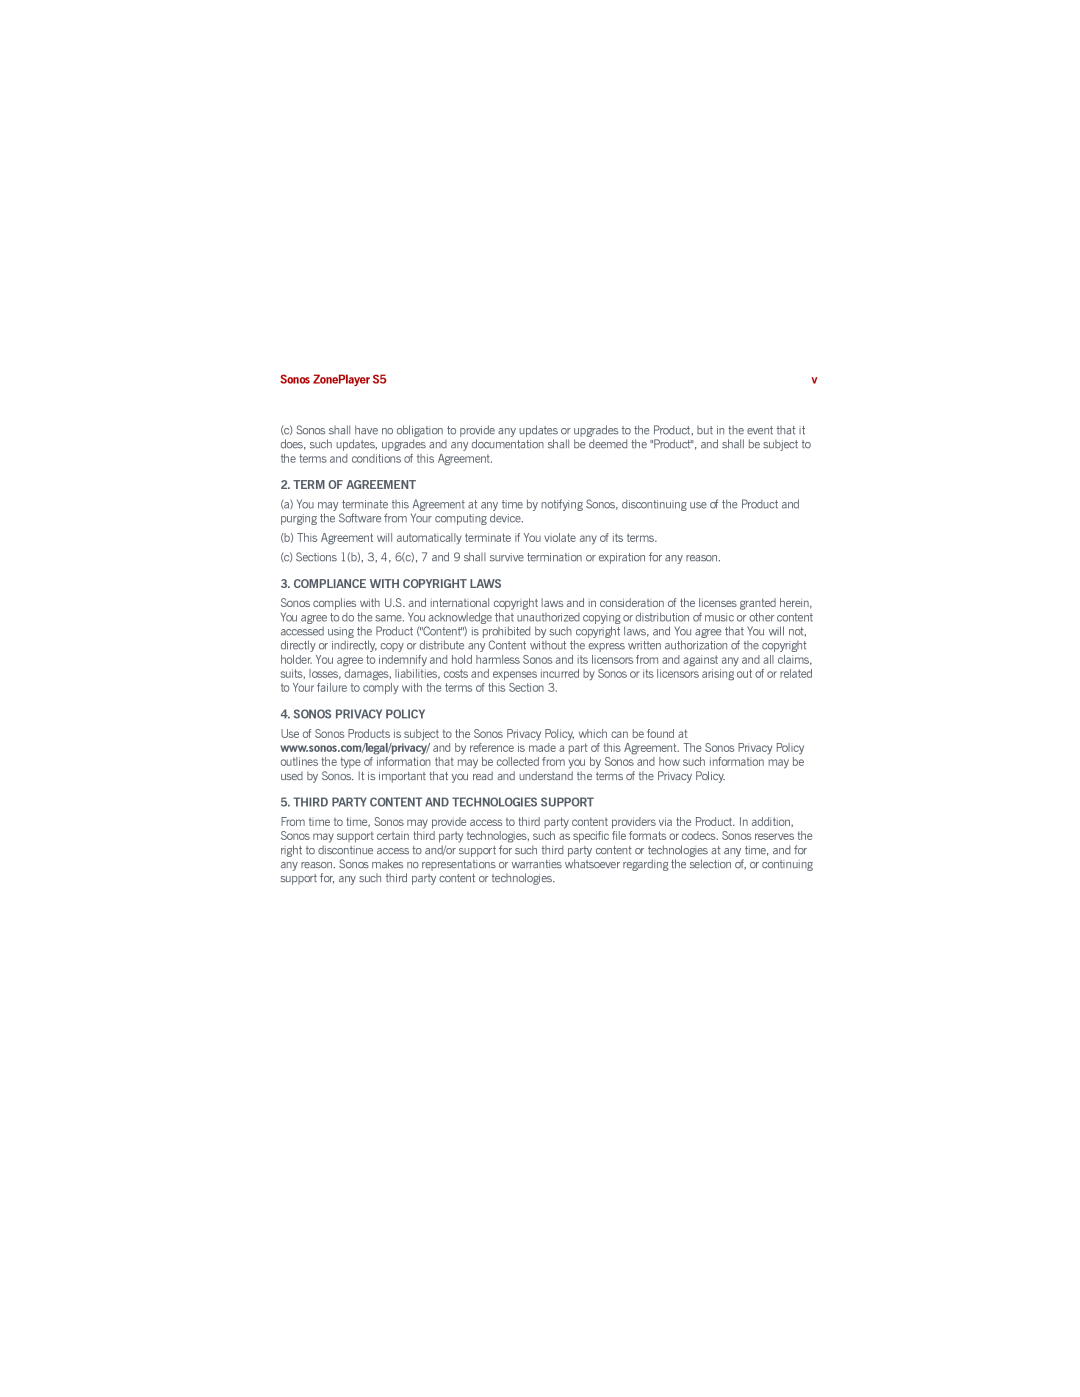 Sonos manual English Deutsch Nederlands Svenska, Sonos ZonePlayer S5, Term Of Agreement, Compliance With Copyright Laws 